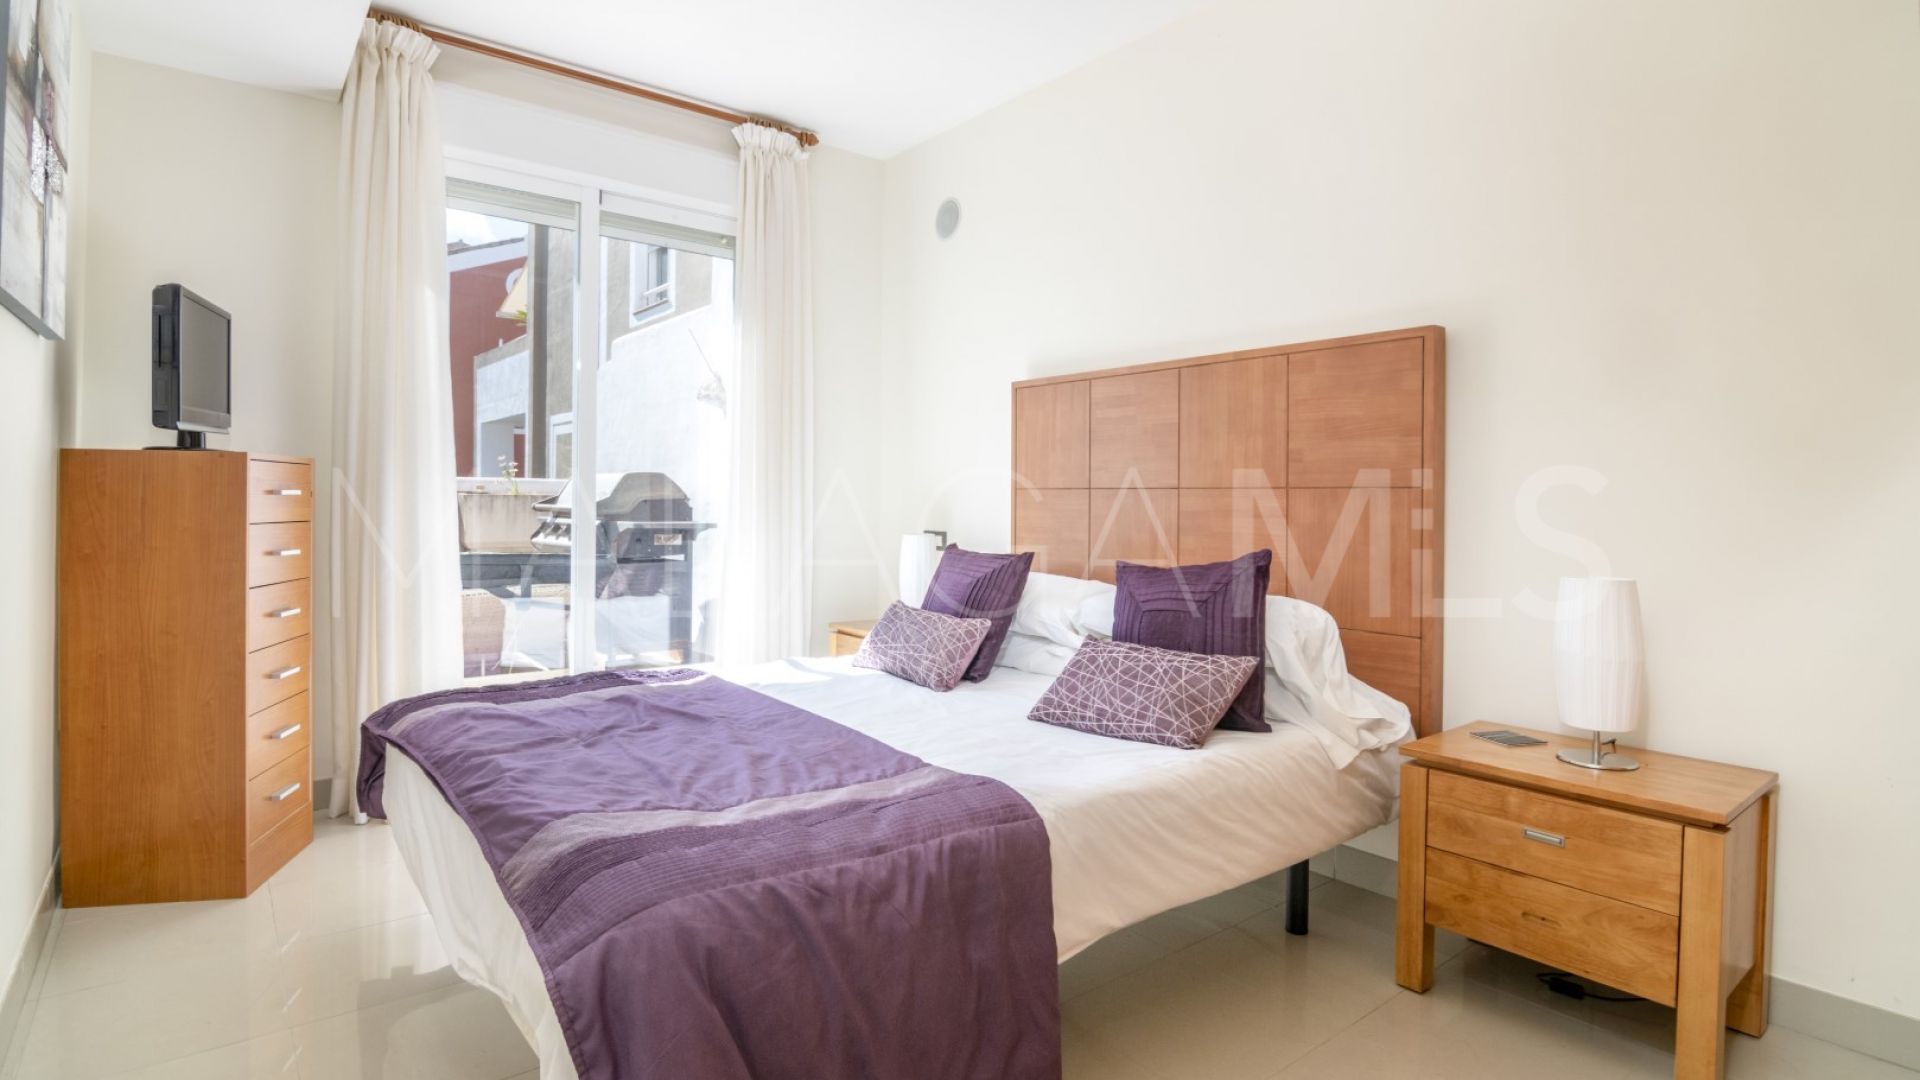 3 bedrooms duplex penthouse for sale in Cortijo del Mar